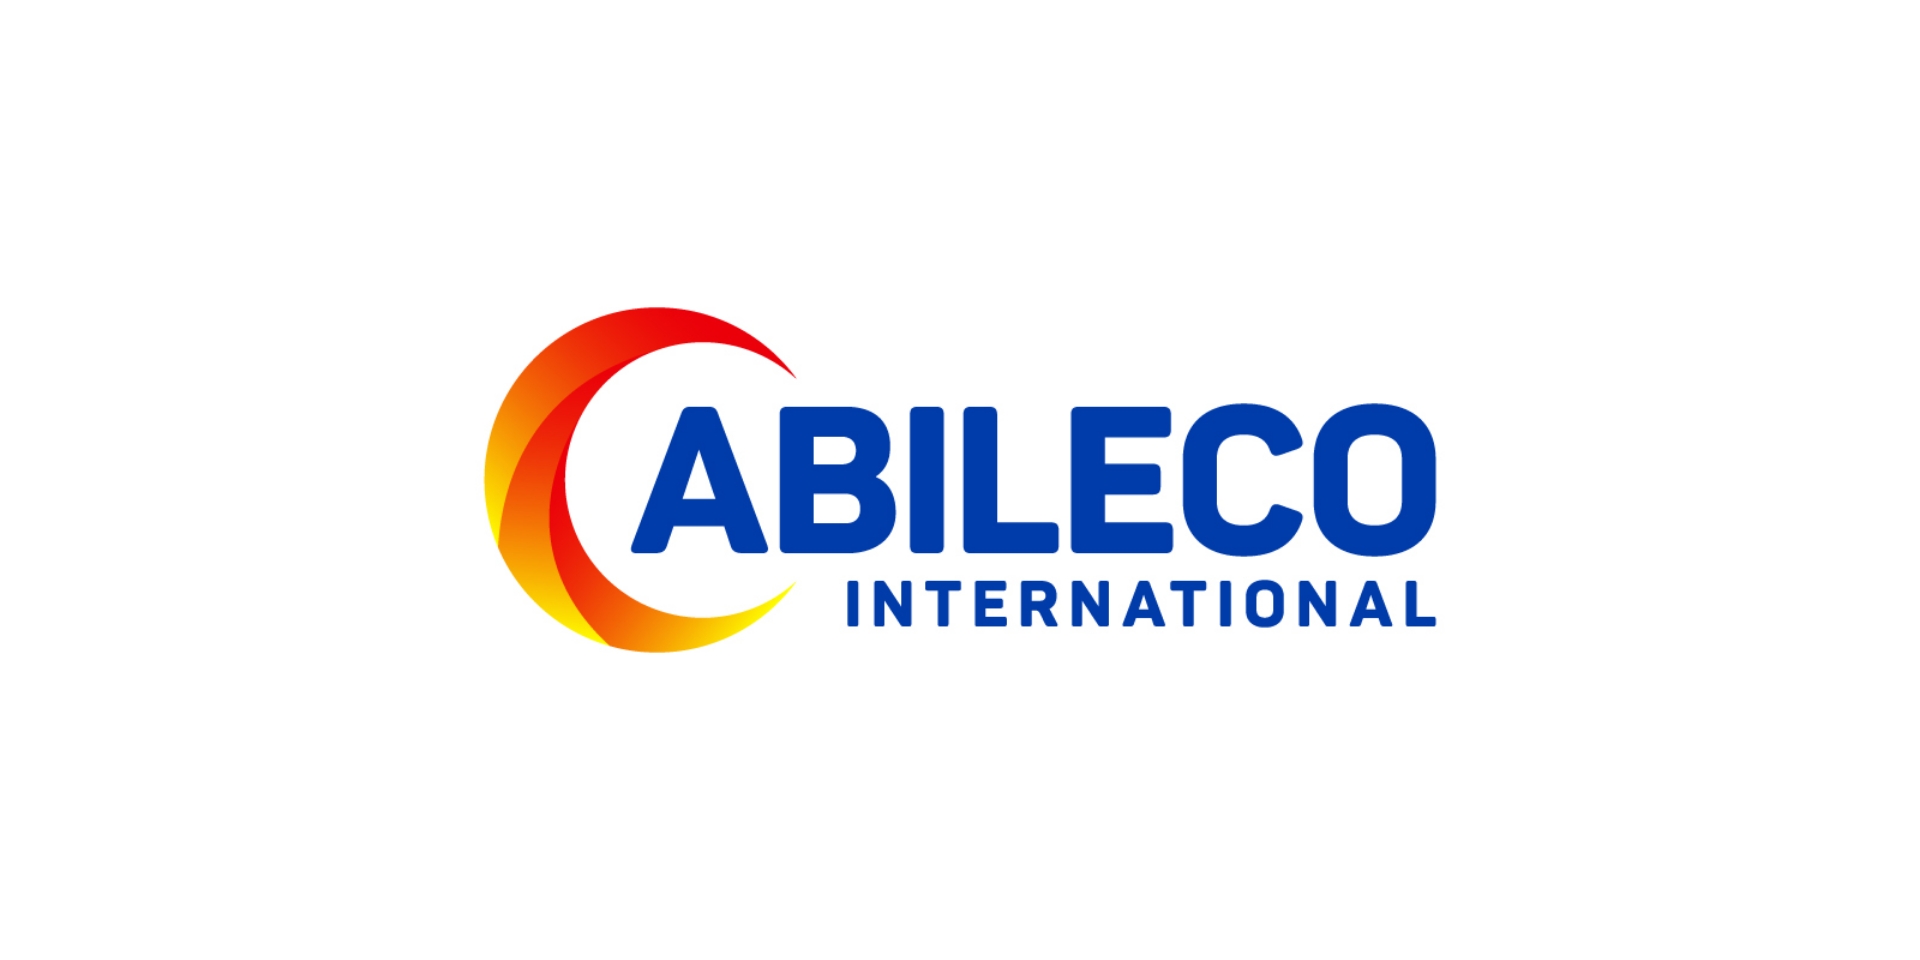 Abileco International